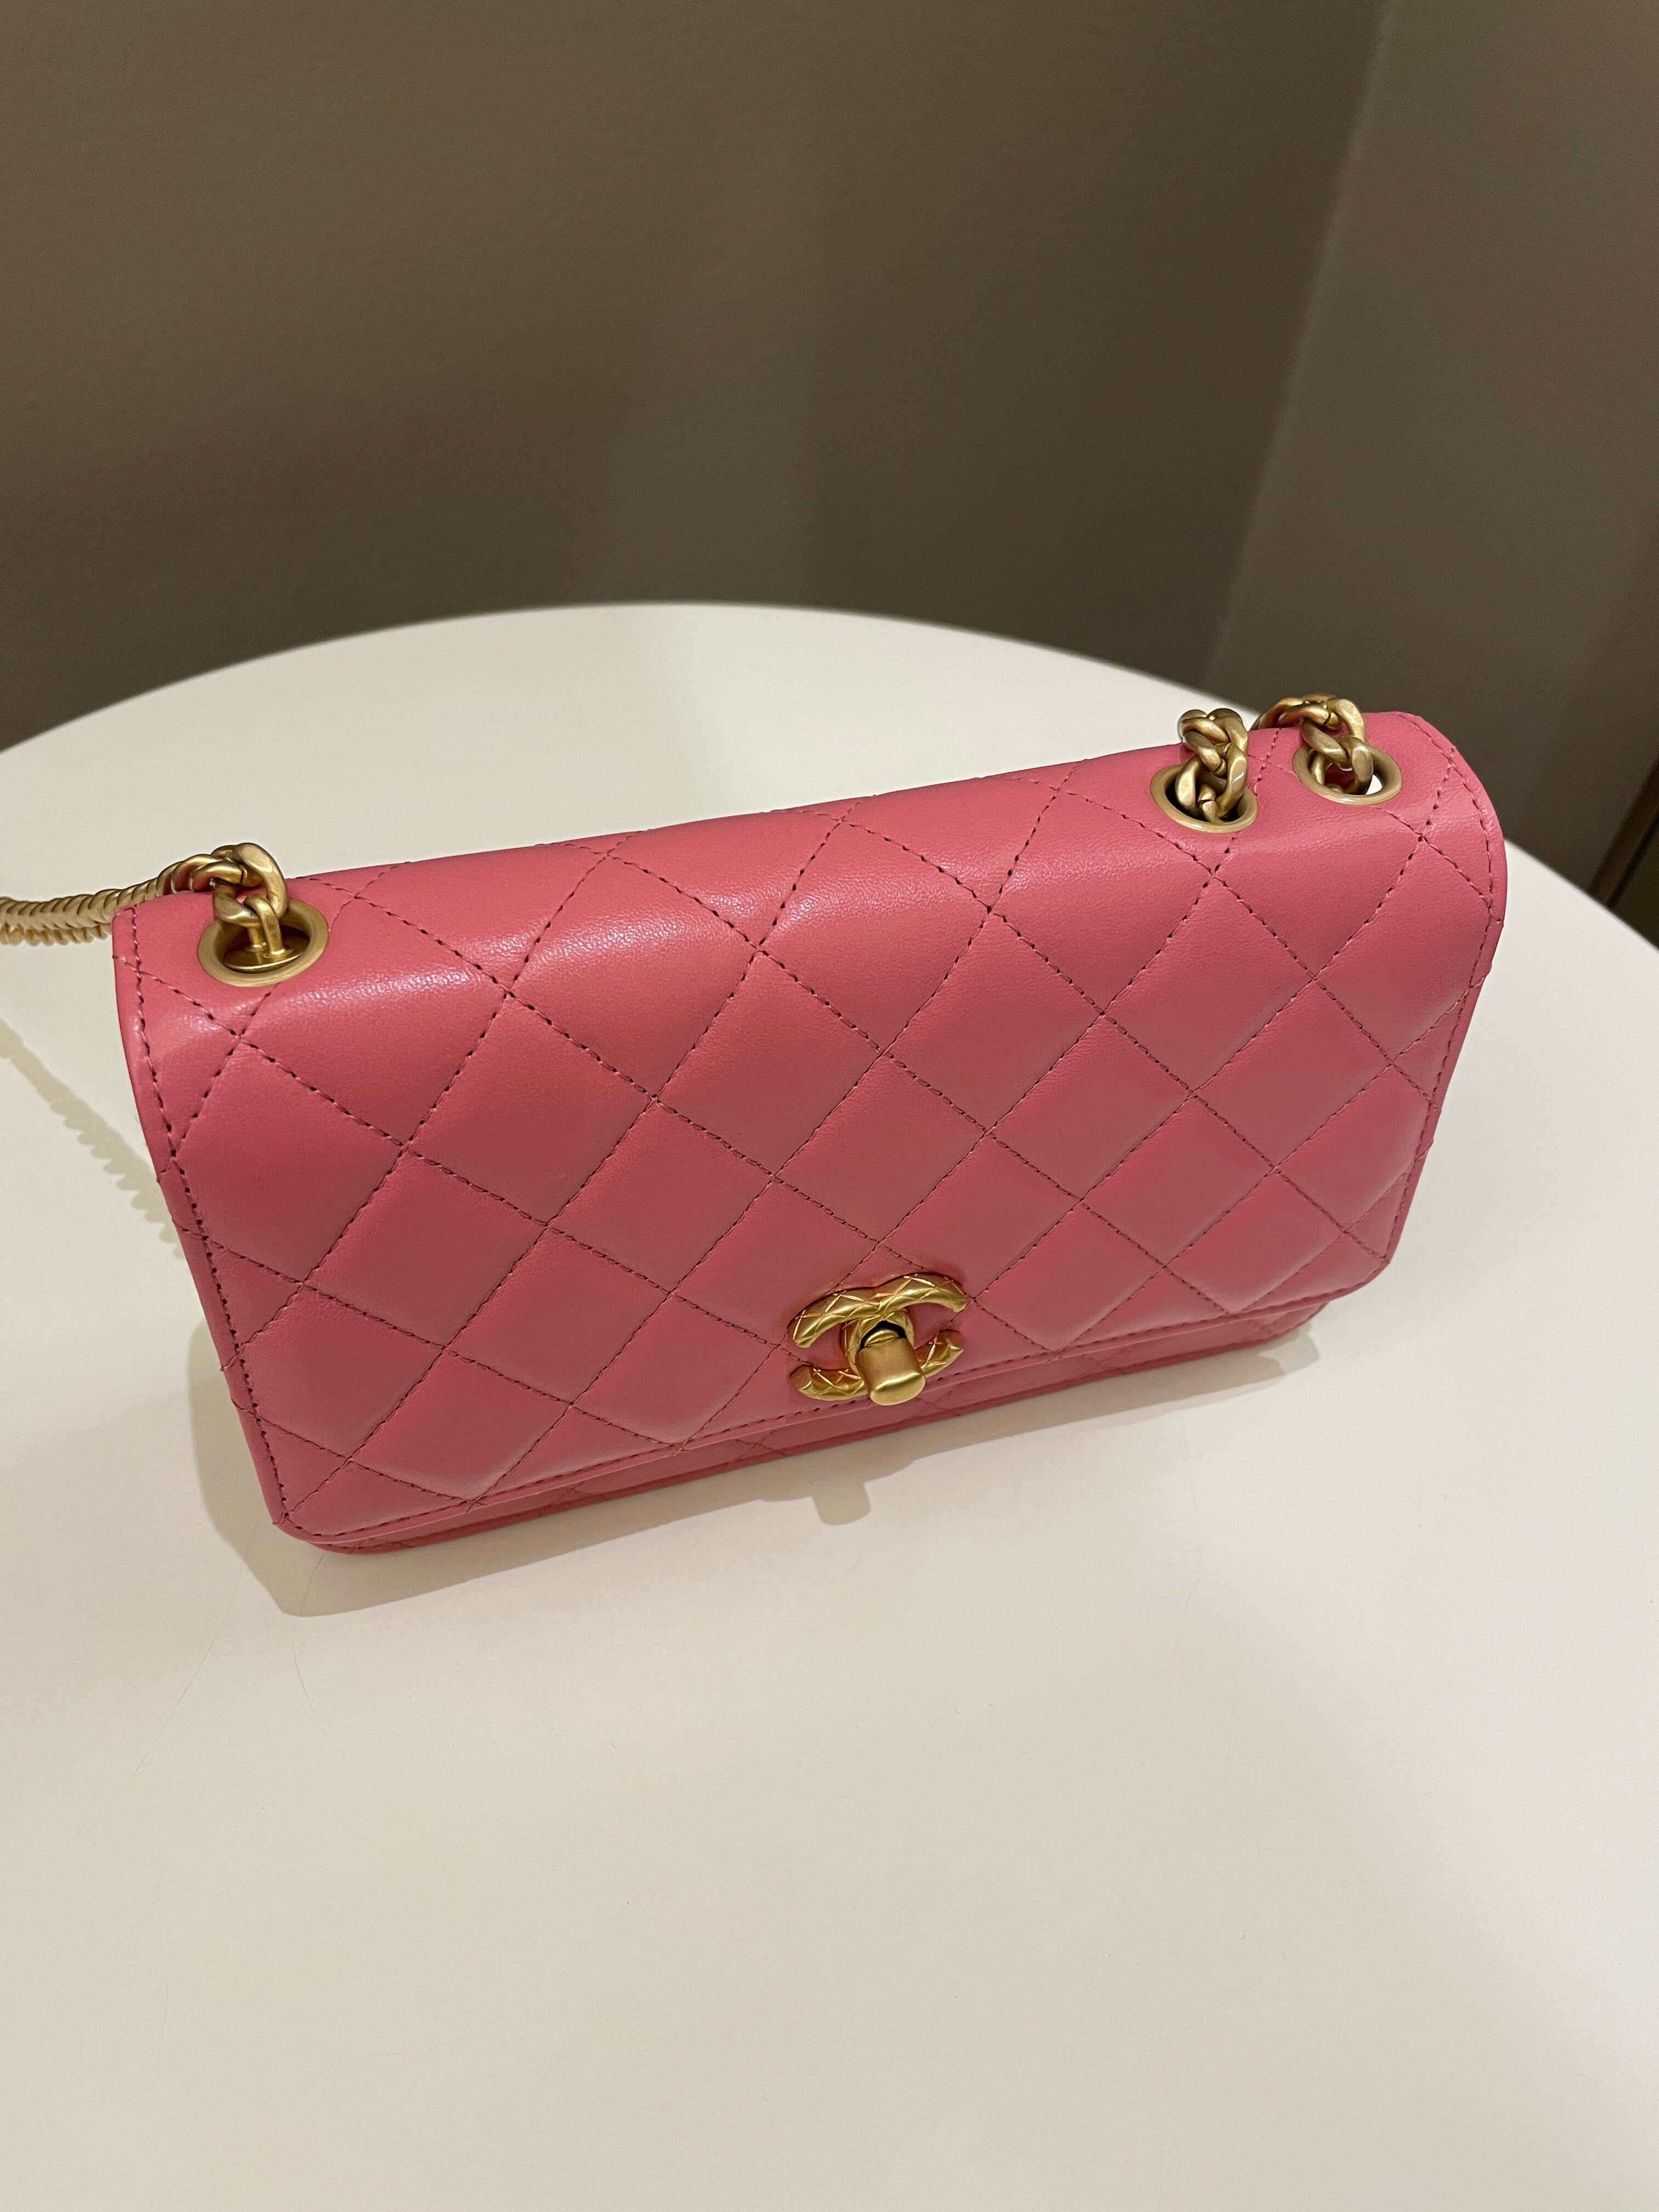 Chanel 23B Pearl Crush Wallet On Chain
Pink Lambskin